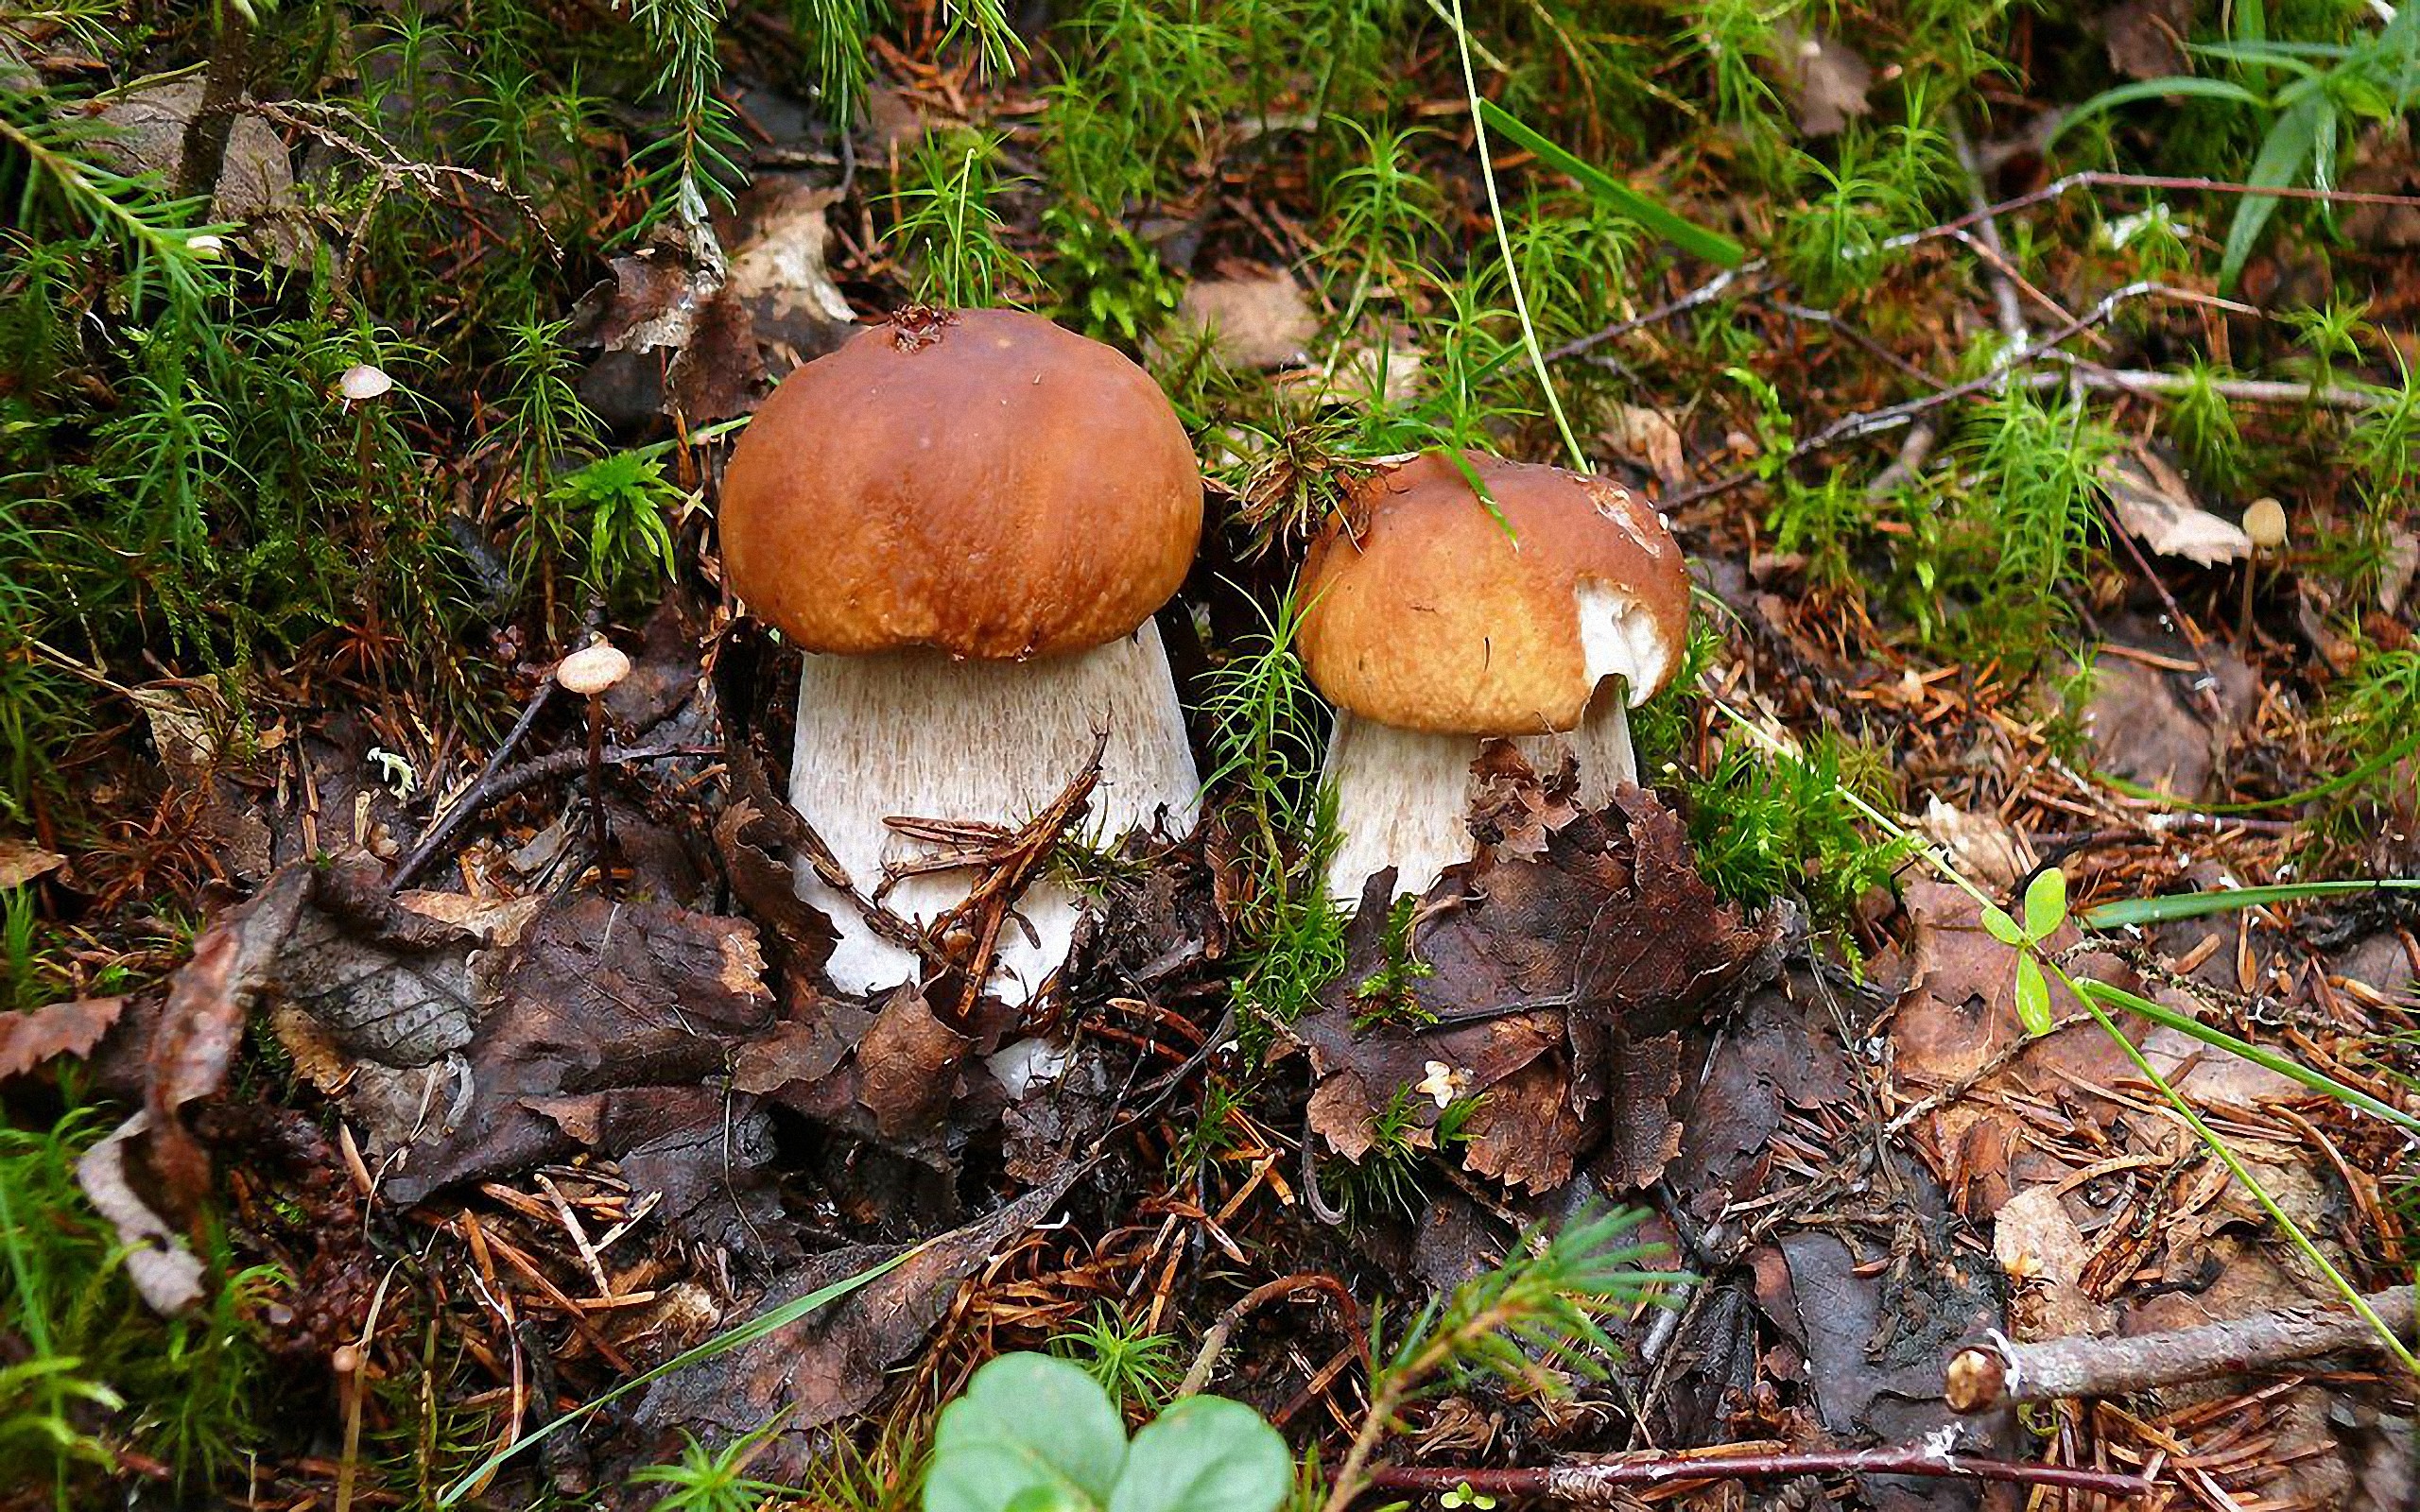 General 2560x1600 mushroom nature plants fallen leaves closeup